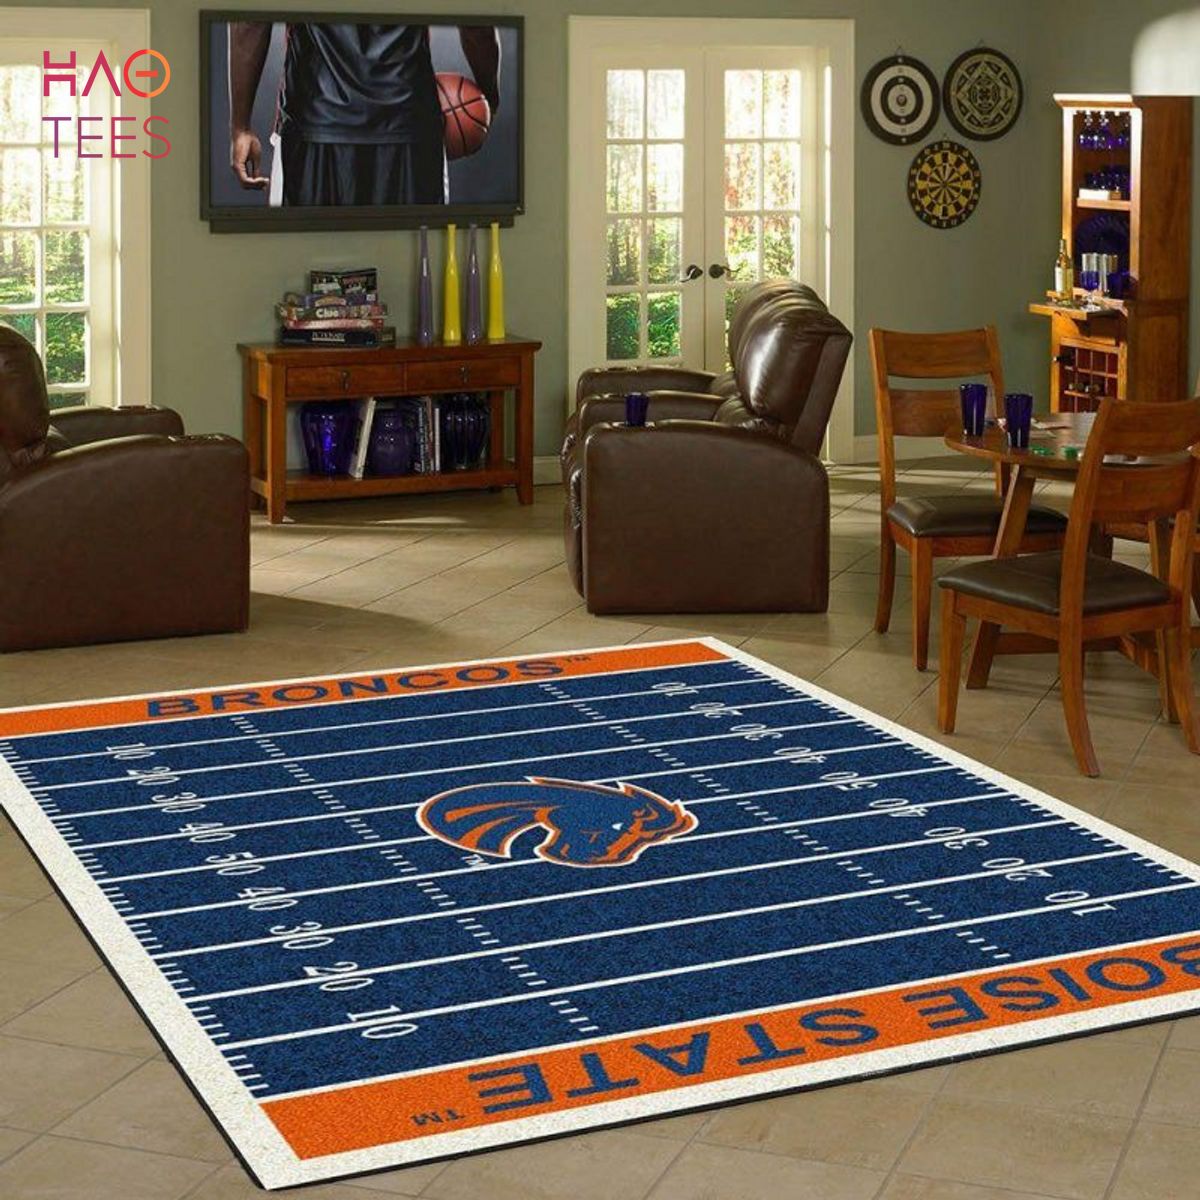 BEST Boise State Rug Team Home Field Carpet Living Room Rugs